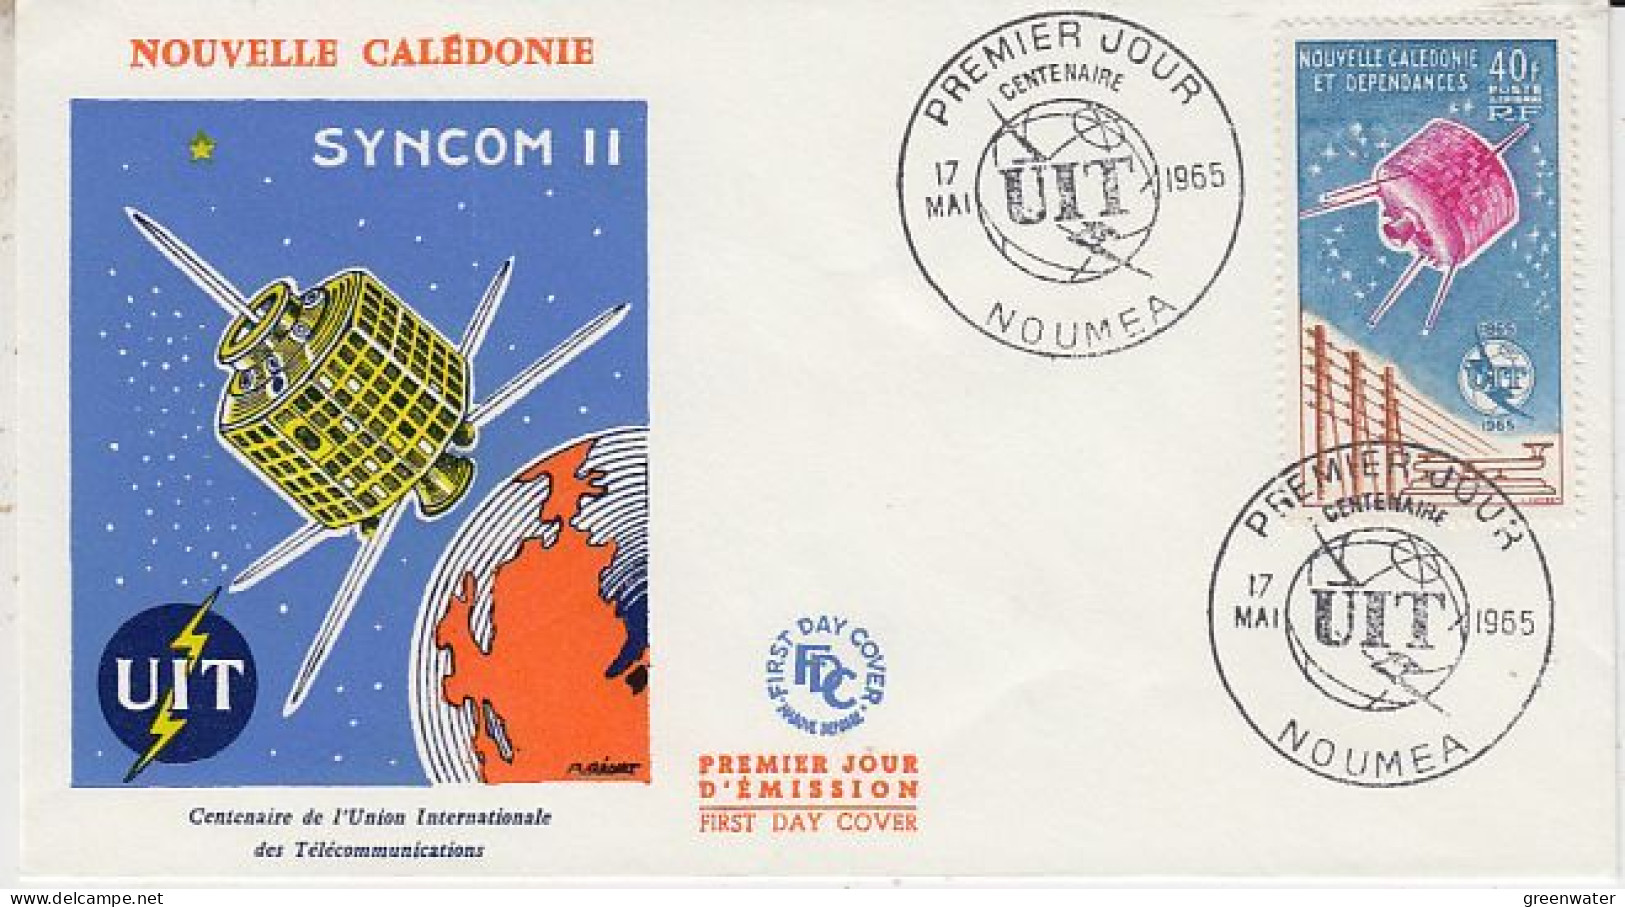 Nouvelle Caledonie UIT/ITU Syncom II 1v FDC 1965 (OO158) - Oceania